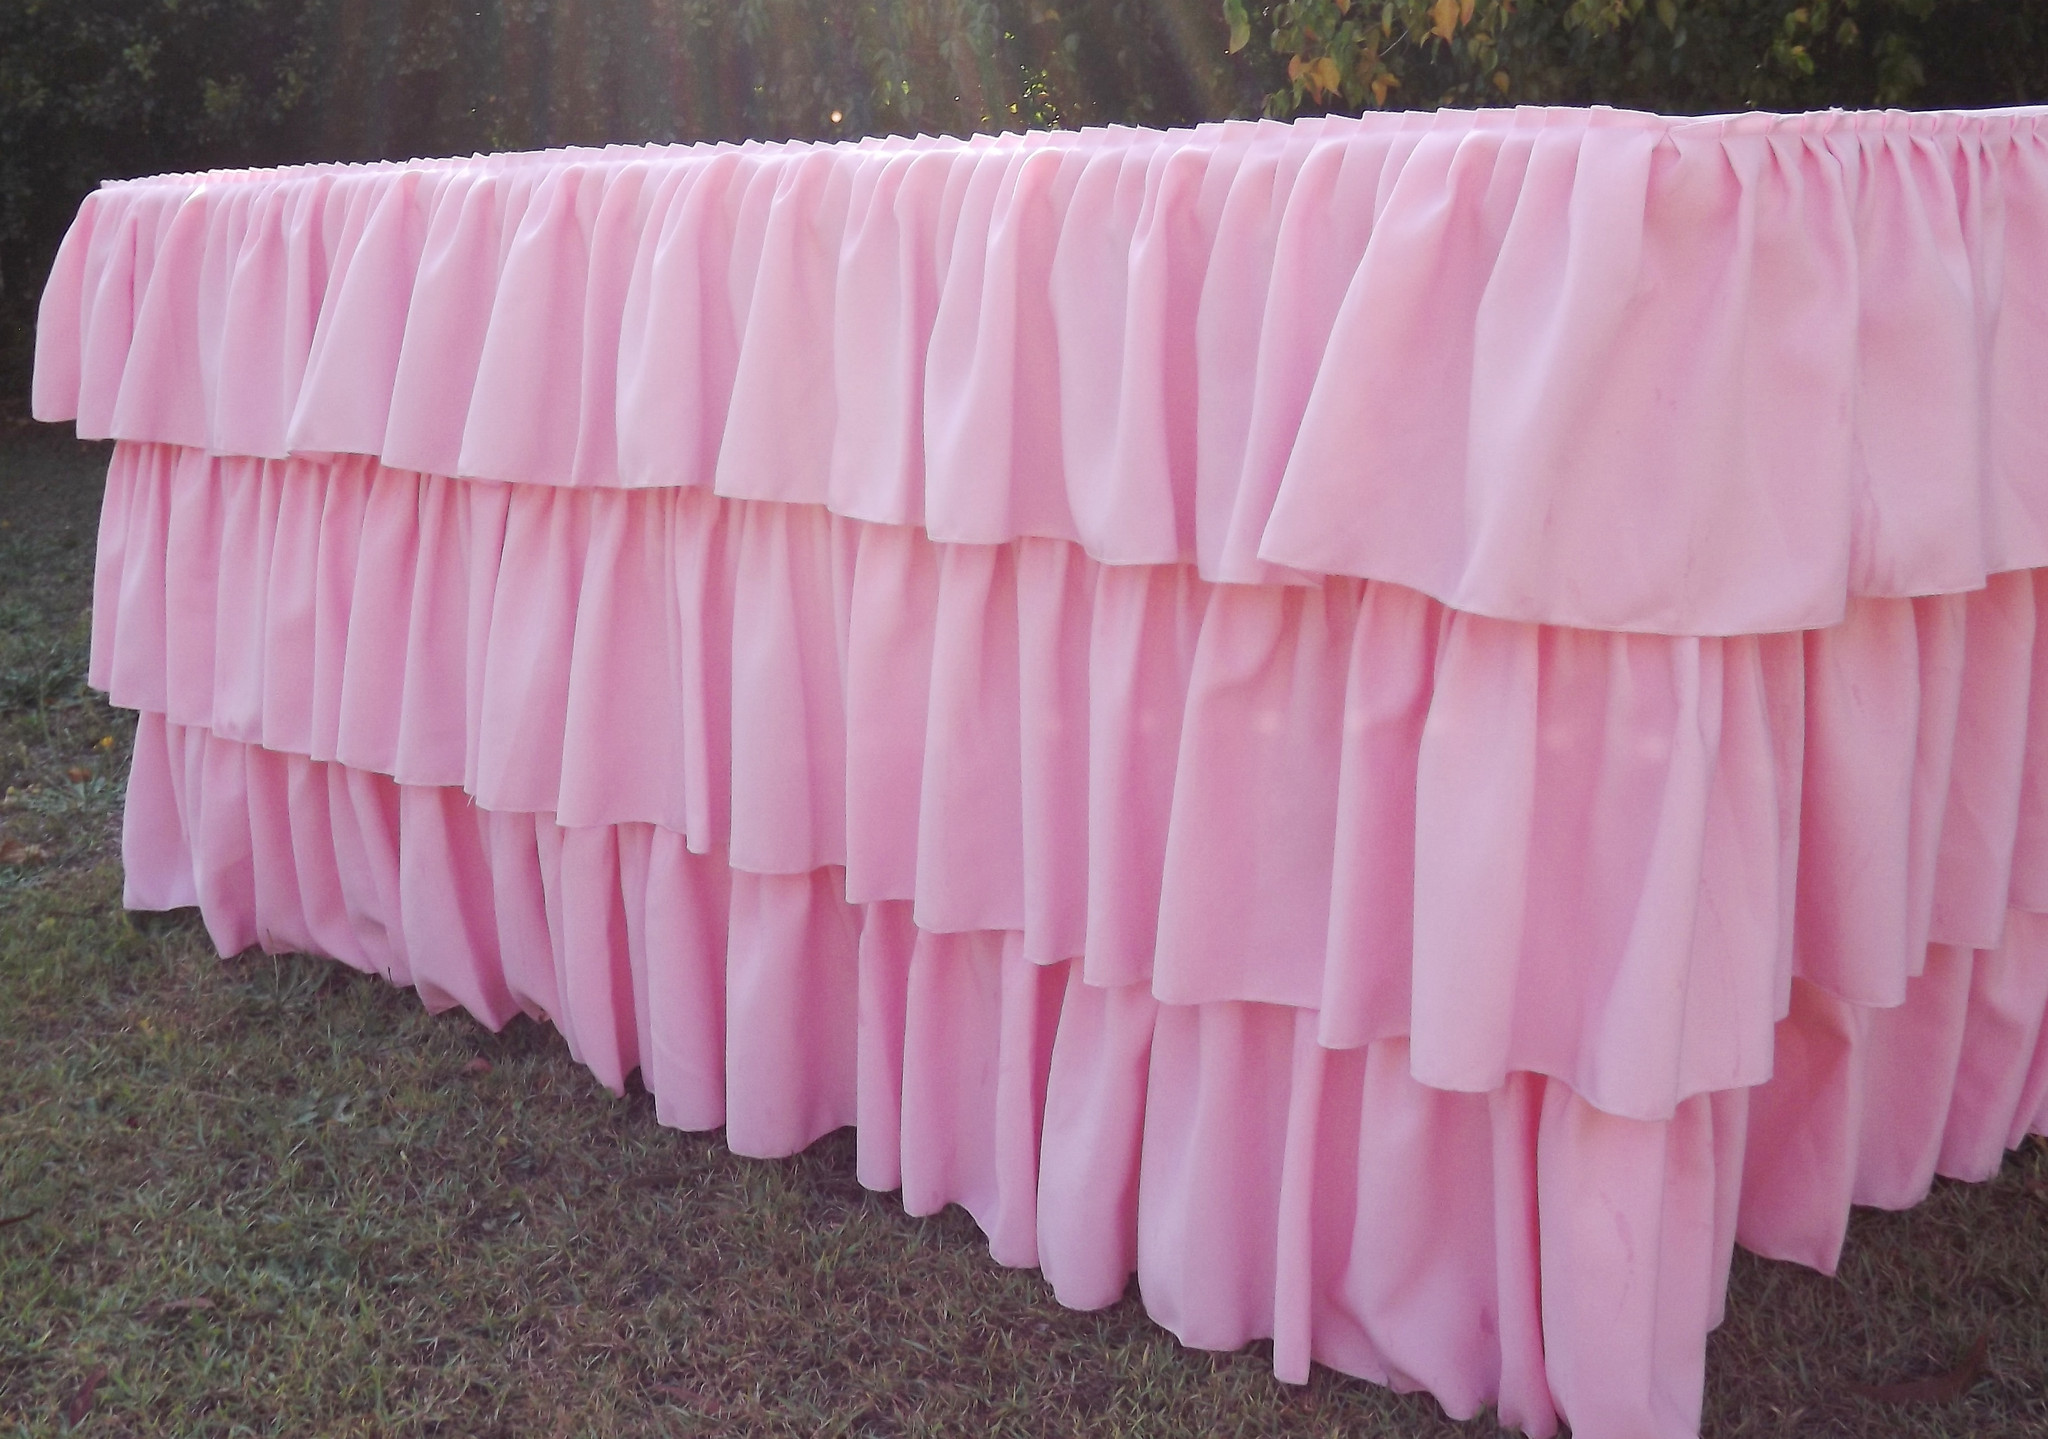 Pink ruffled tablecloth - Saffy and May